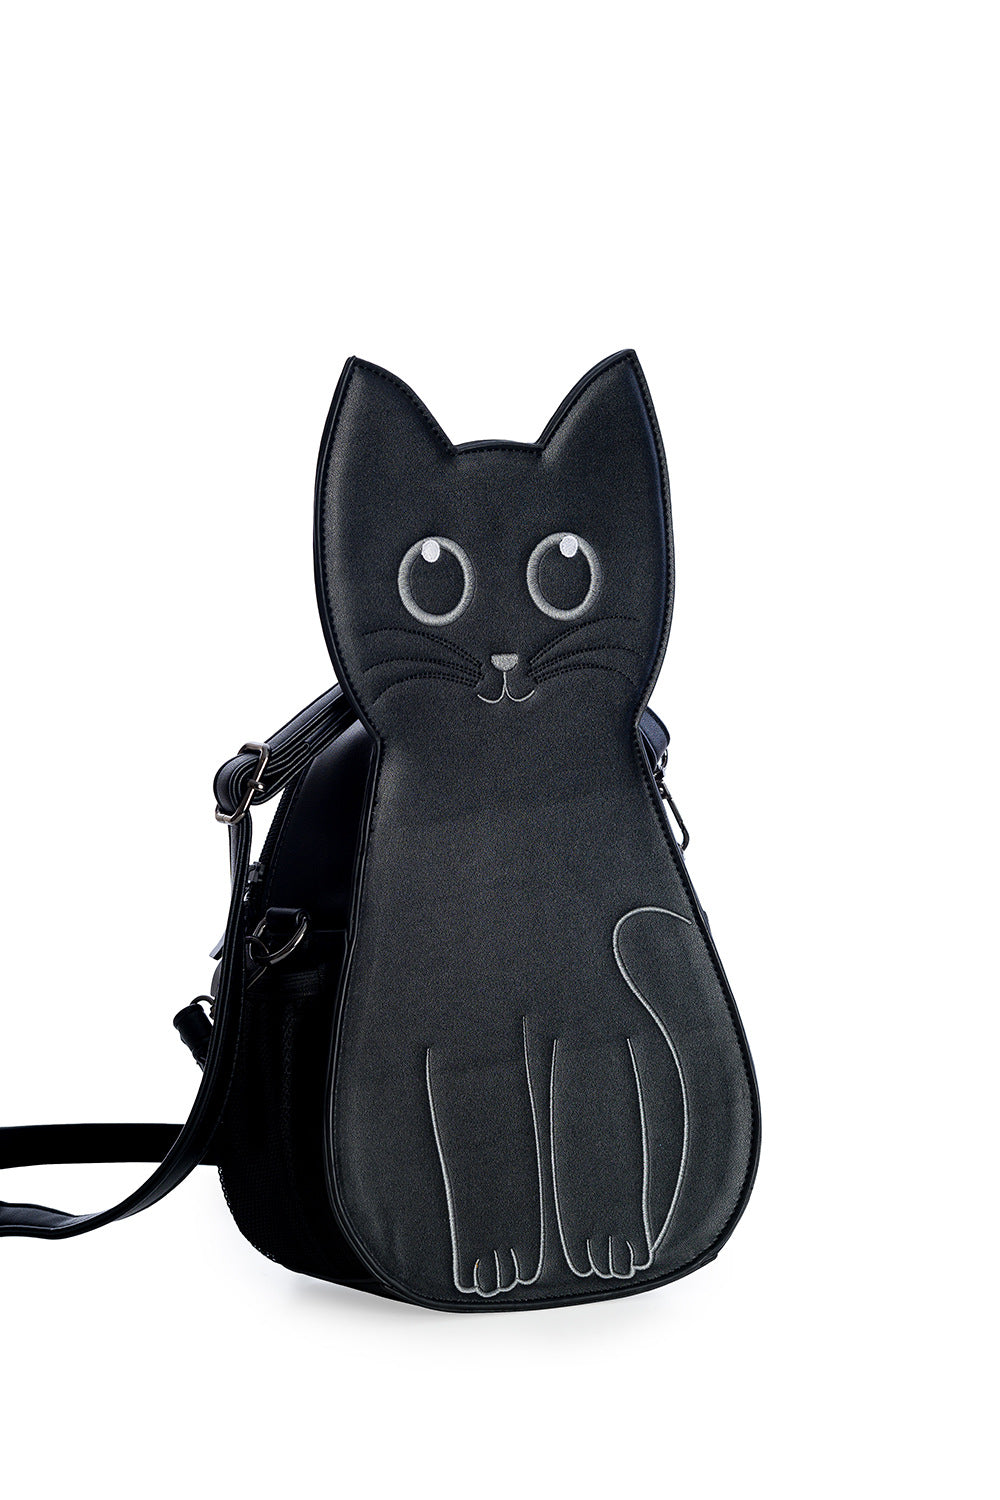 Lost Queen Women's Wendigo Bag Convertible Backpack Cute Black Cat Bat Crossbody Purse